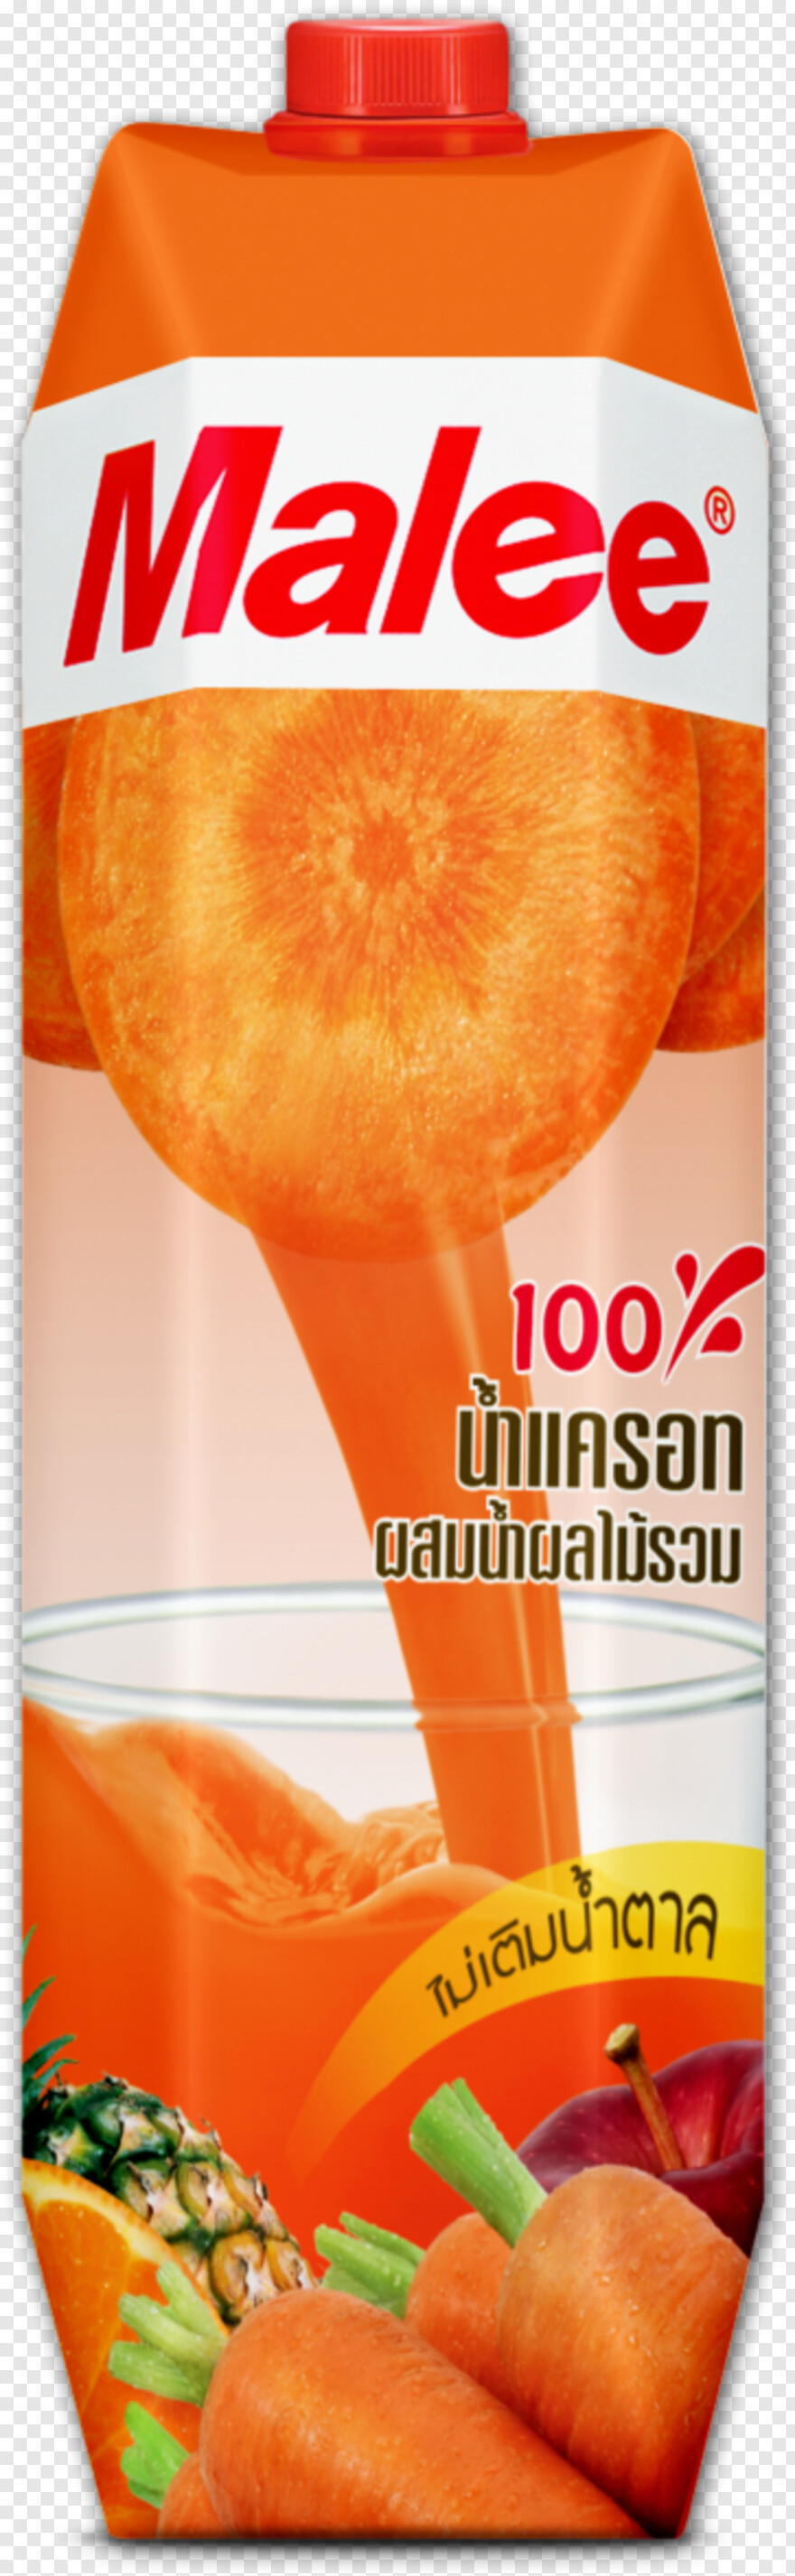 orange-juice # 1061139